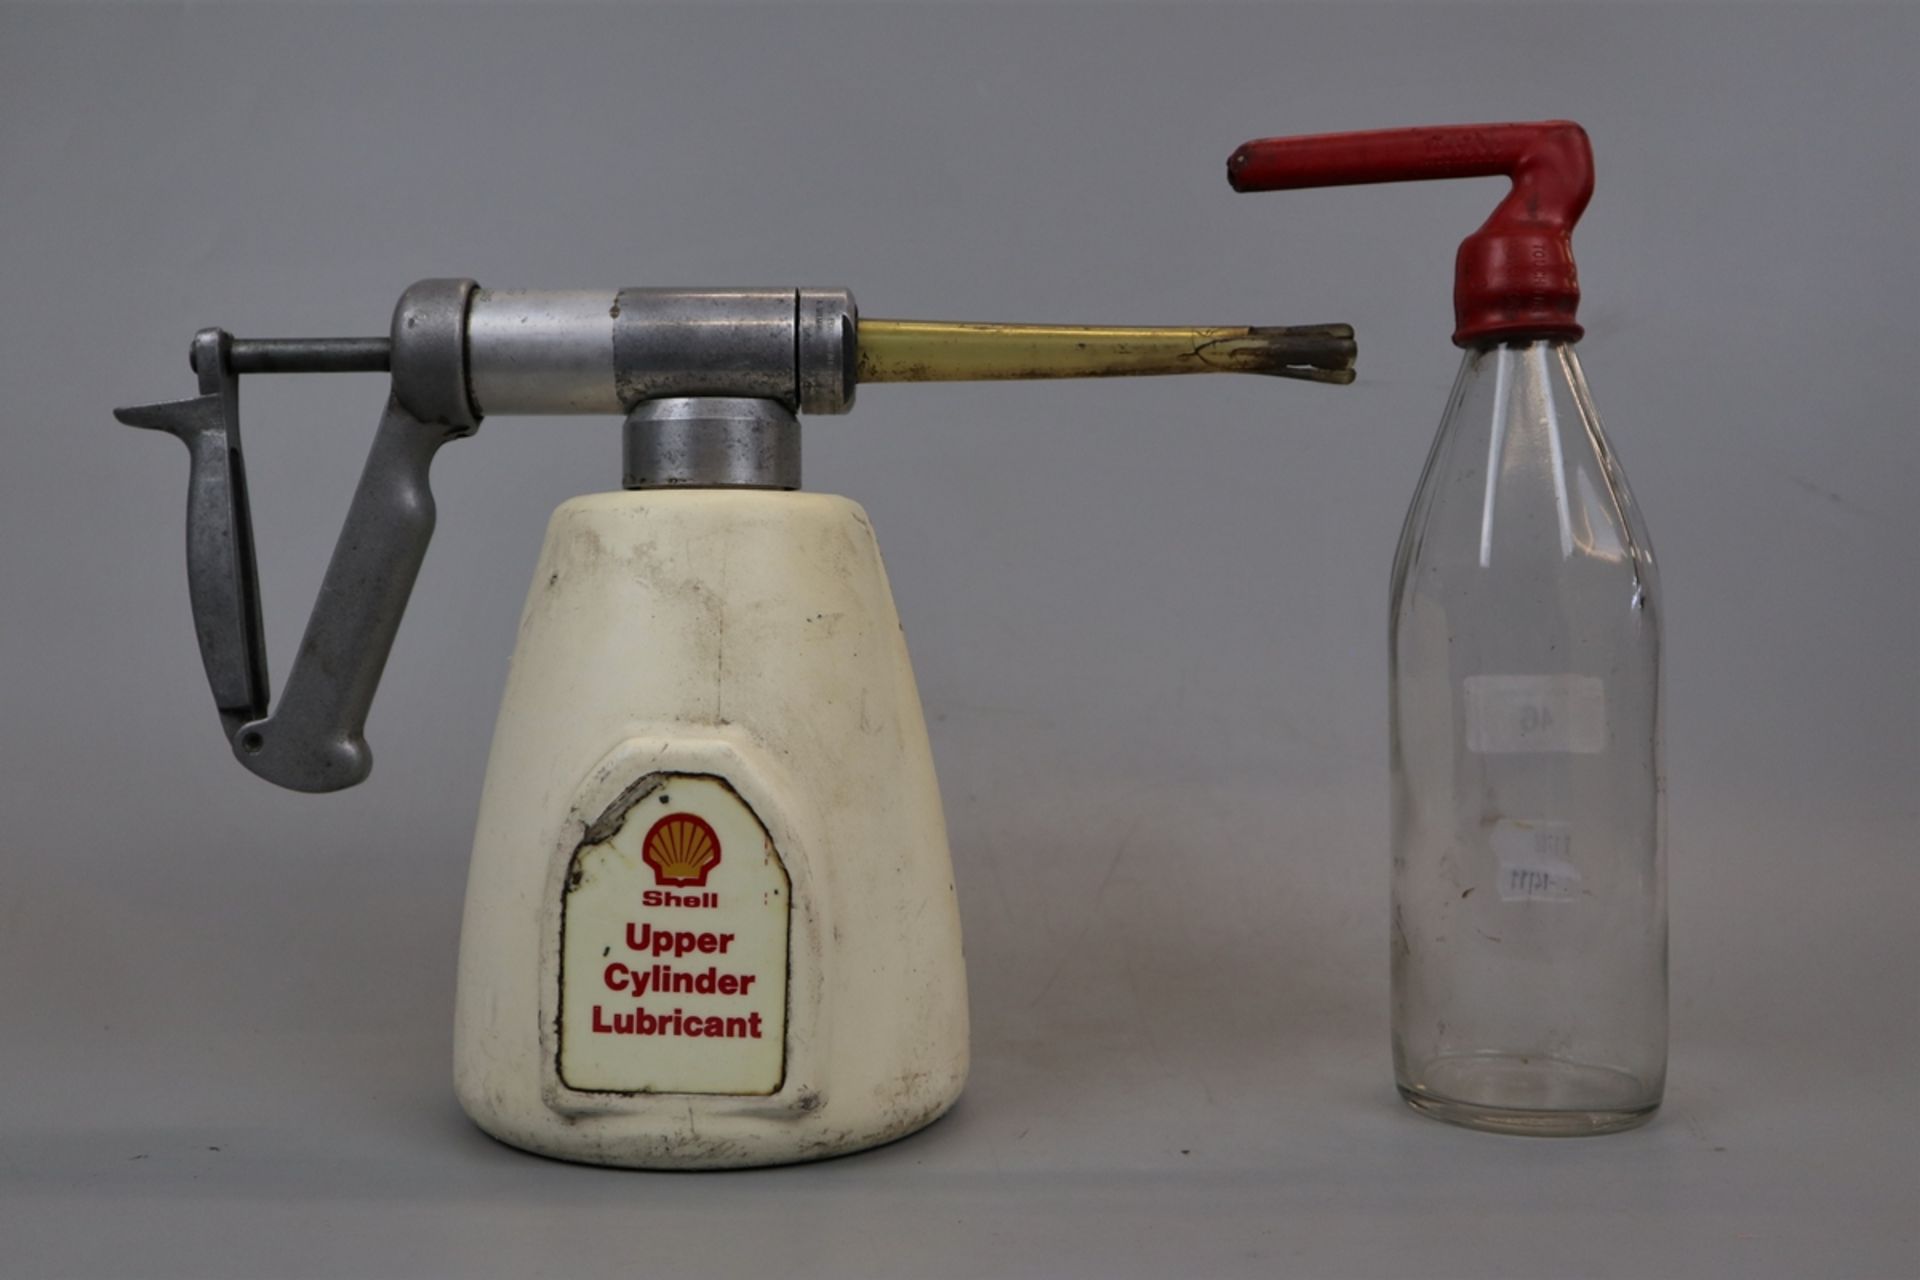 Vintage Shell upper cylinder lubricant can together with Exide battery filling bottle